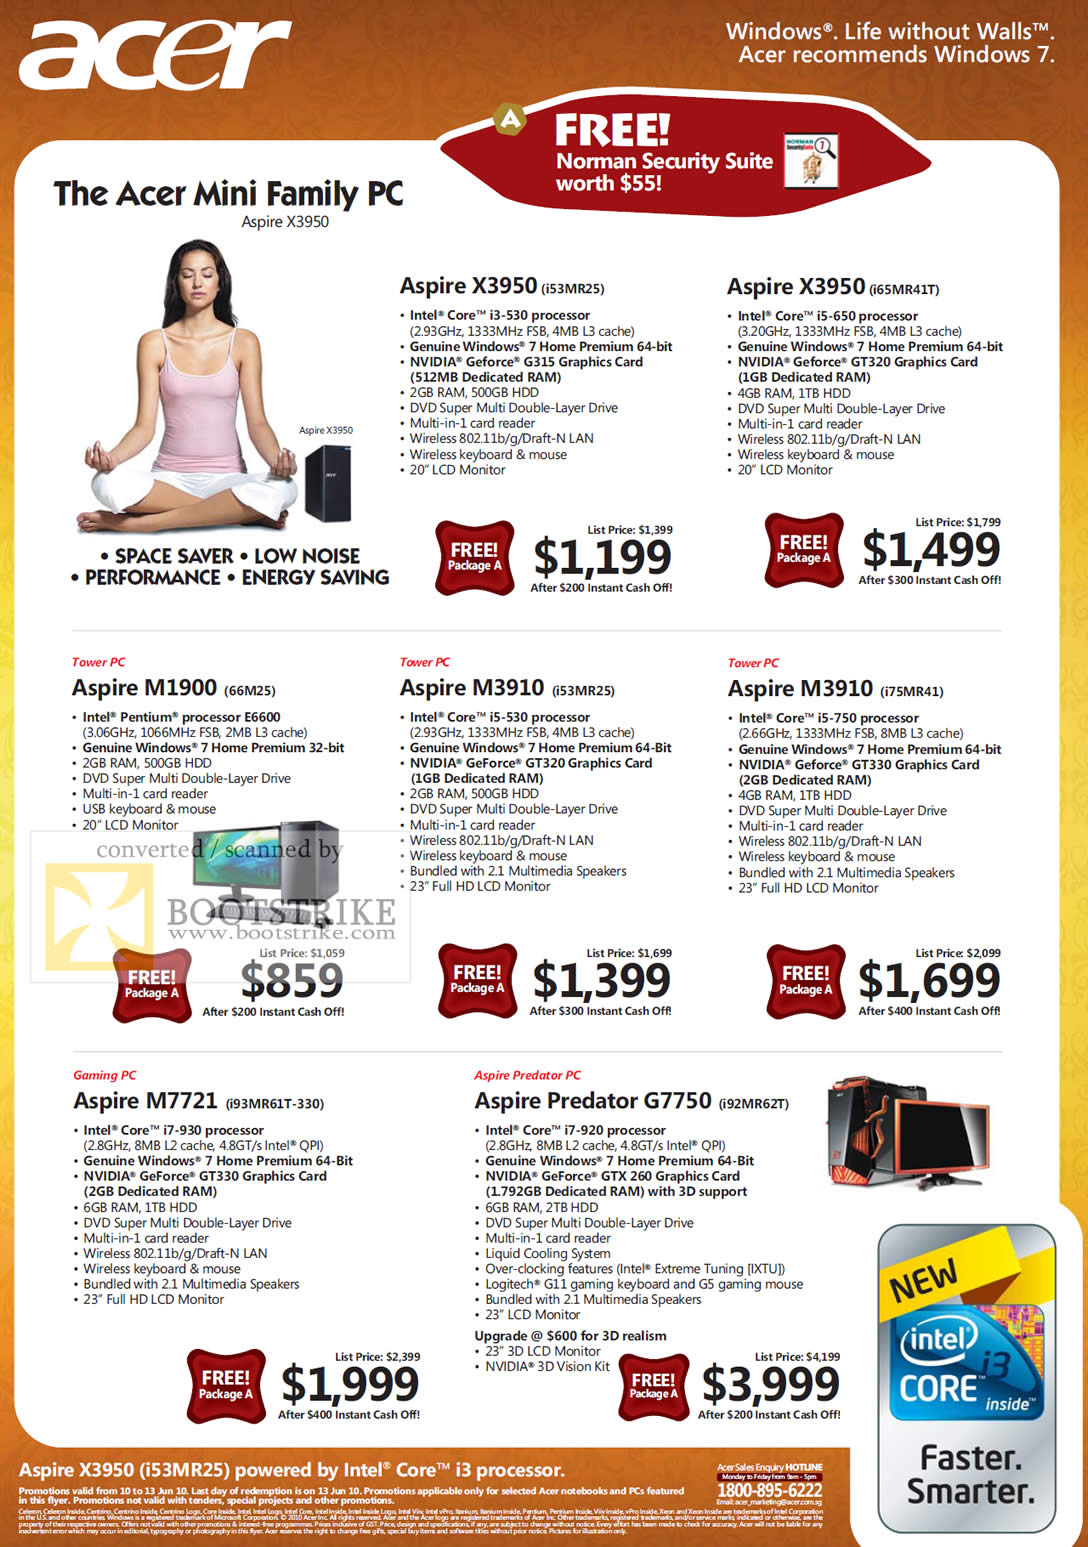 PC Show 2010 price list image brochure of Acer Mini Desktop PC Aspire X3950 M1900 M3910 Gaming M7720 Predator G7750